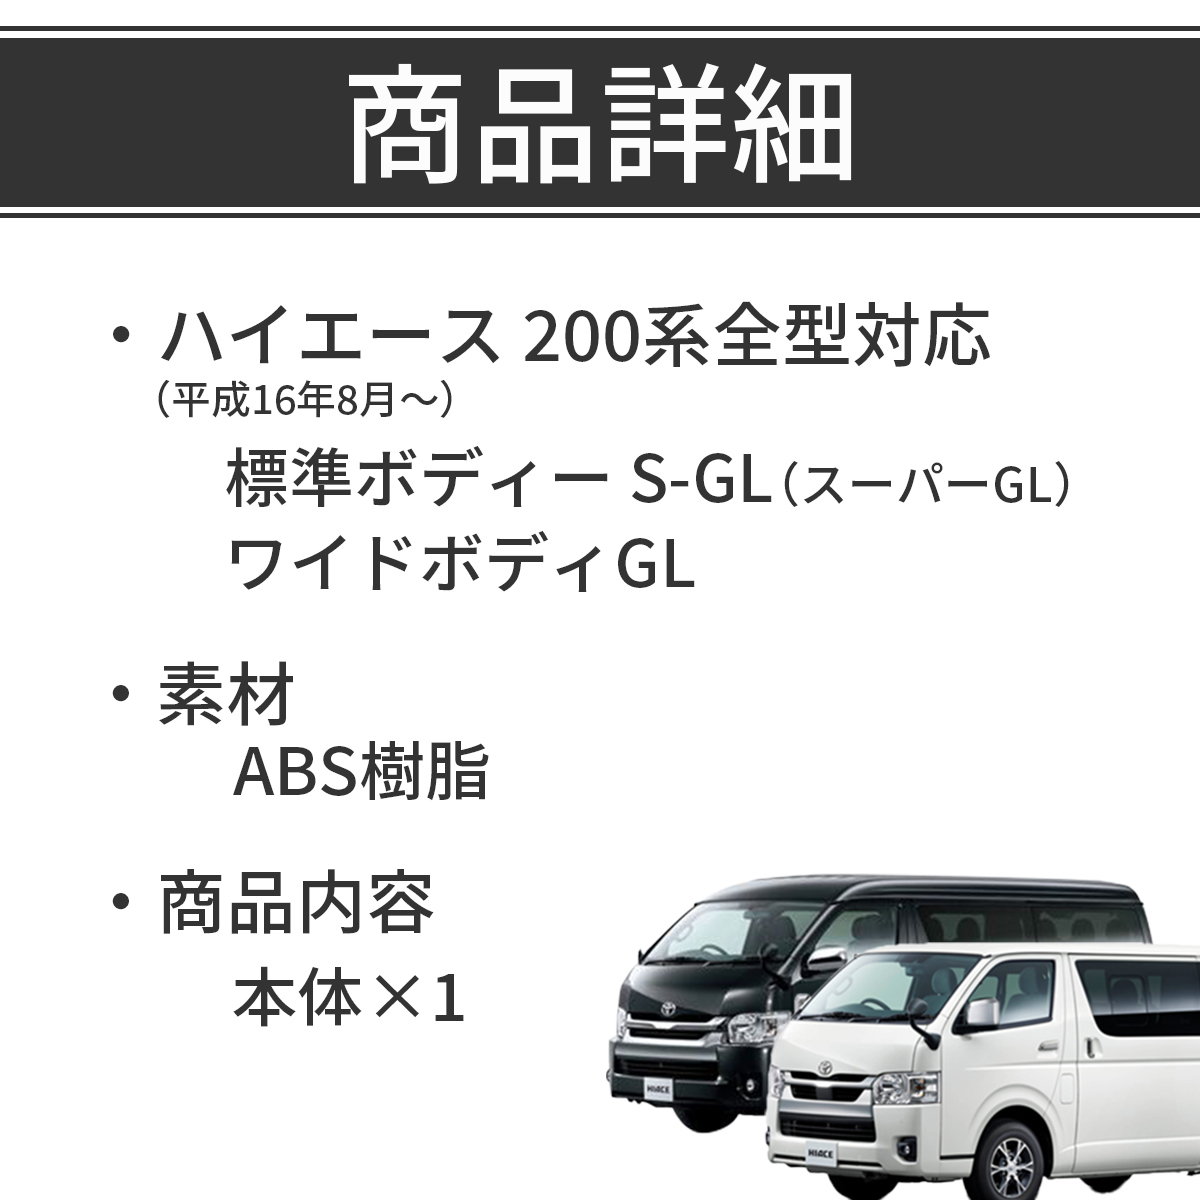  Toyota Hiace stylish fender mirror Hiace 200 series standard * wide common 209 black mica 2